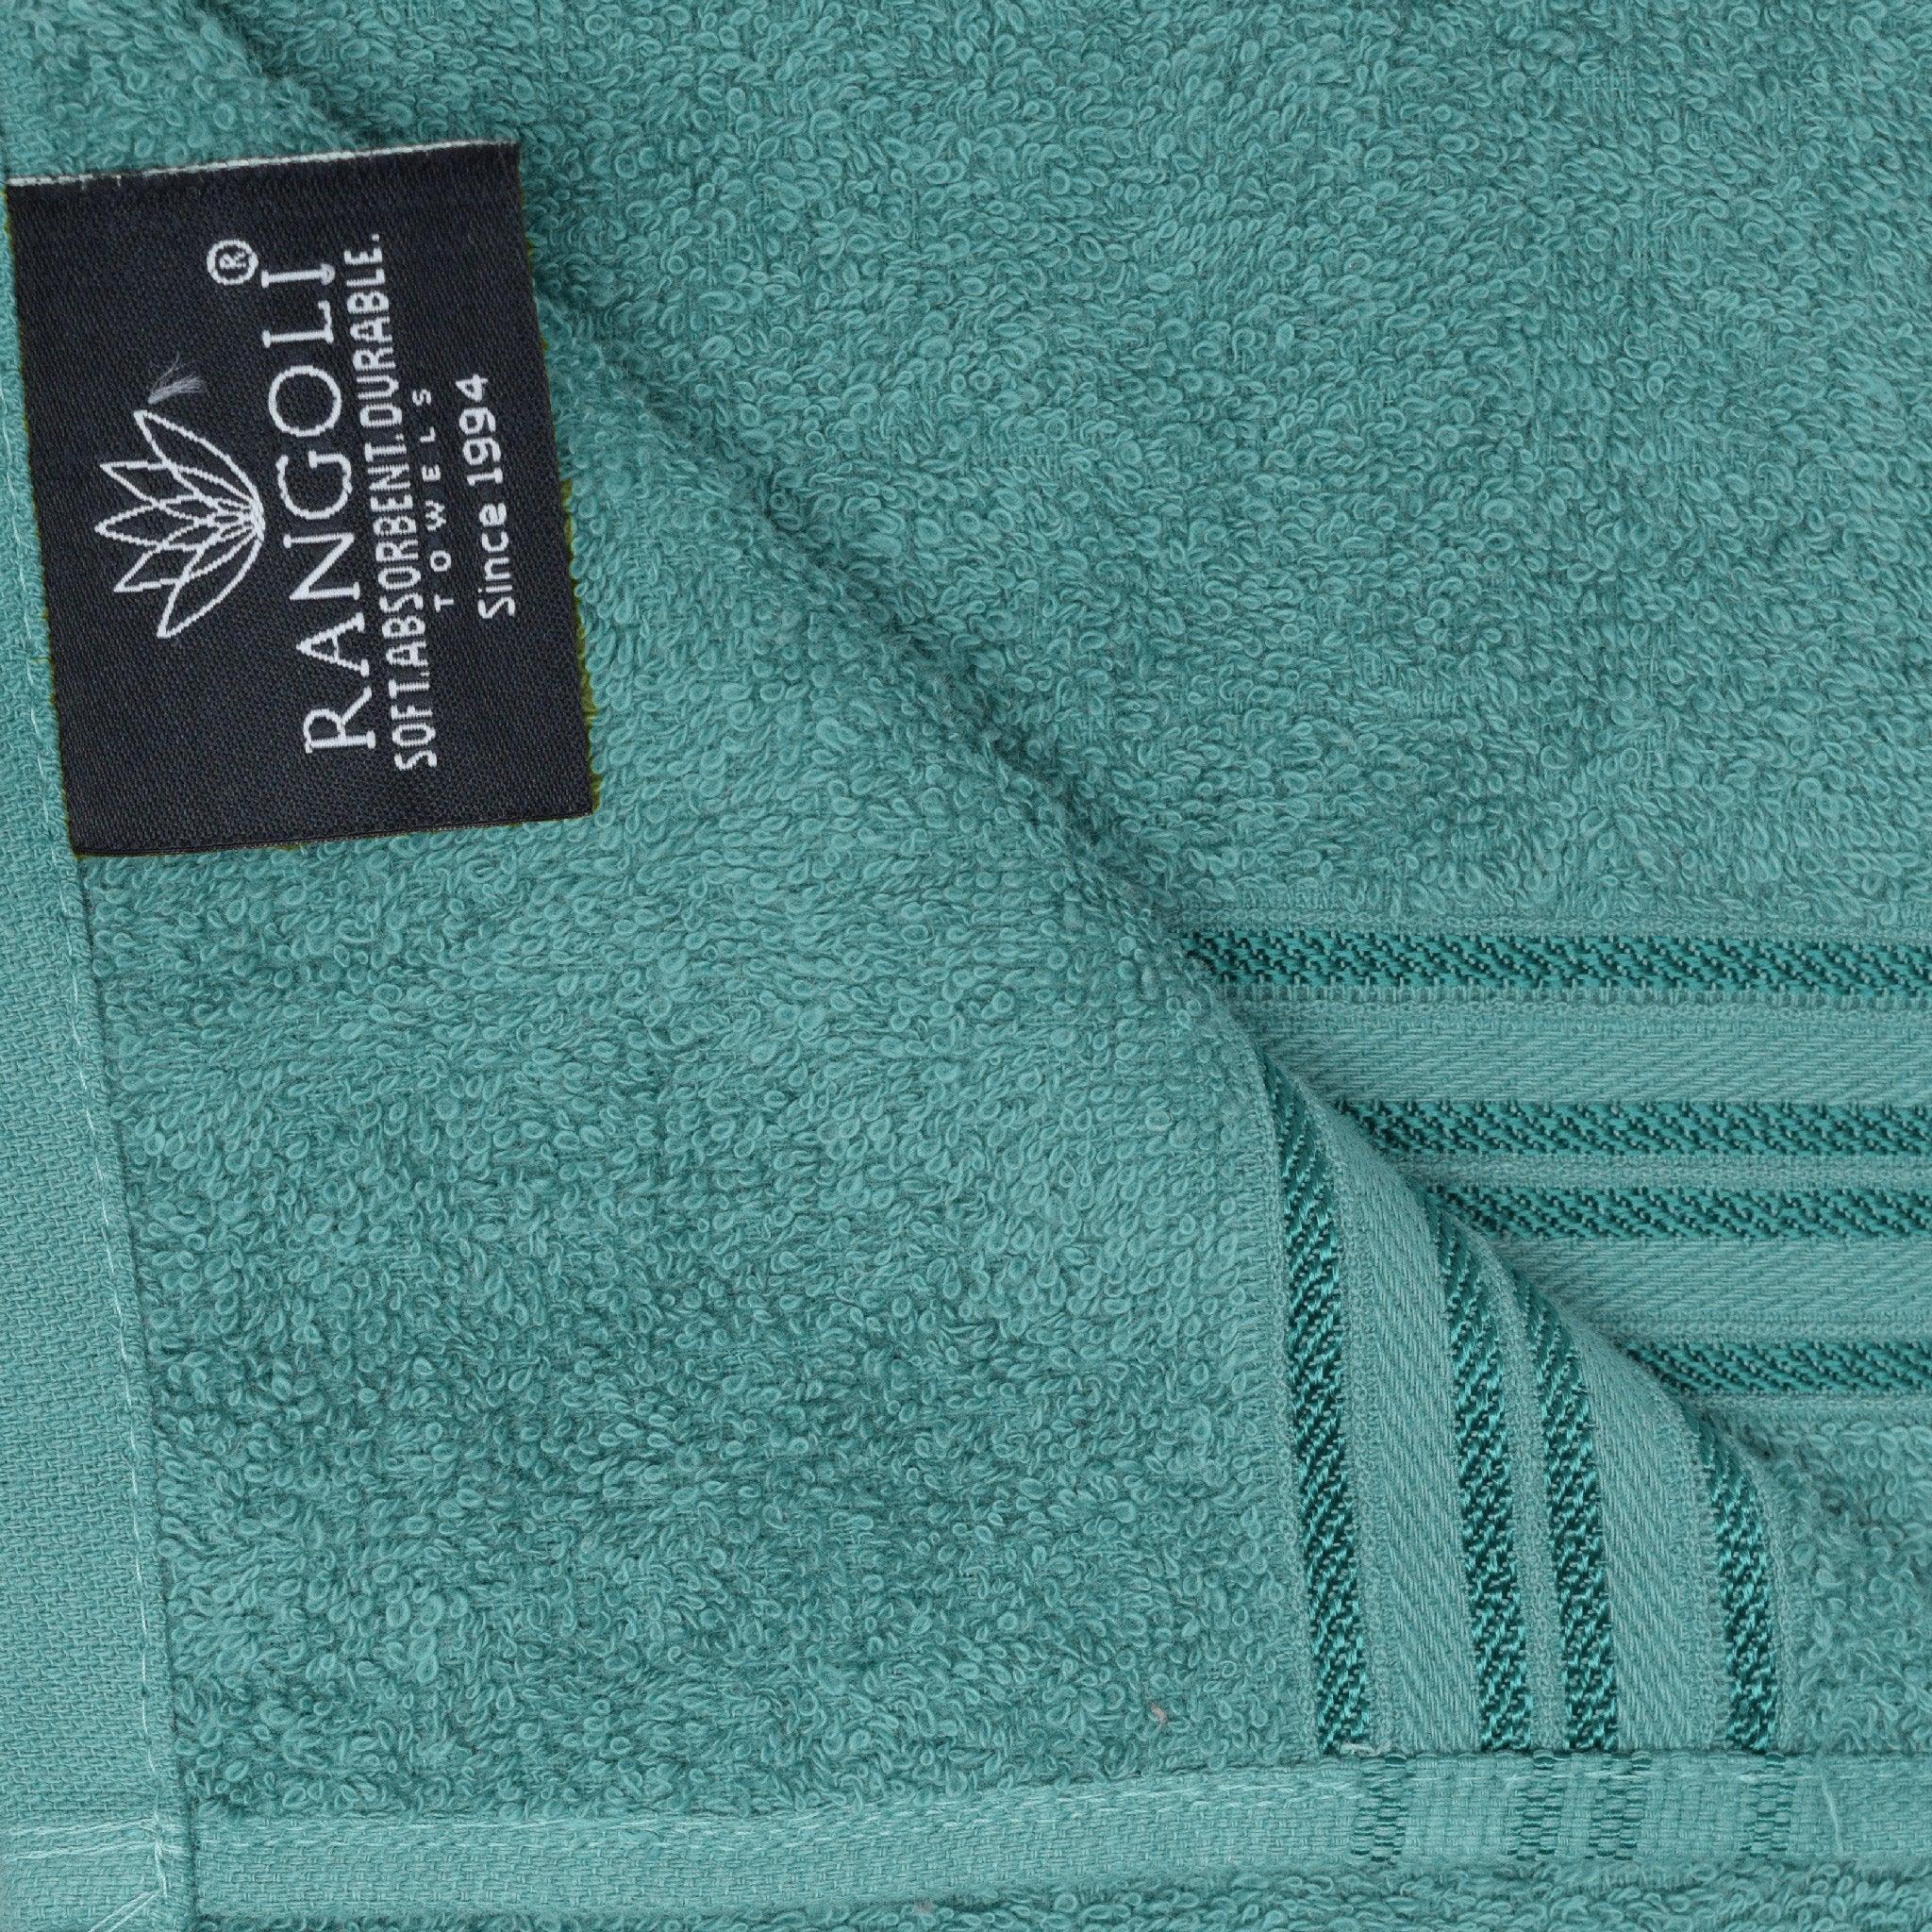 Super Comfy 100% Cotton Towel Set of 4 | Ultra Soft, Lightweight and Quick Drying Towels - Rangoli